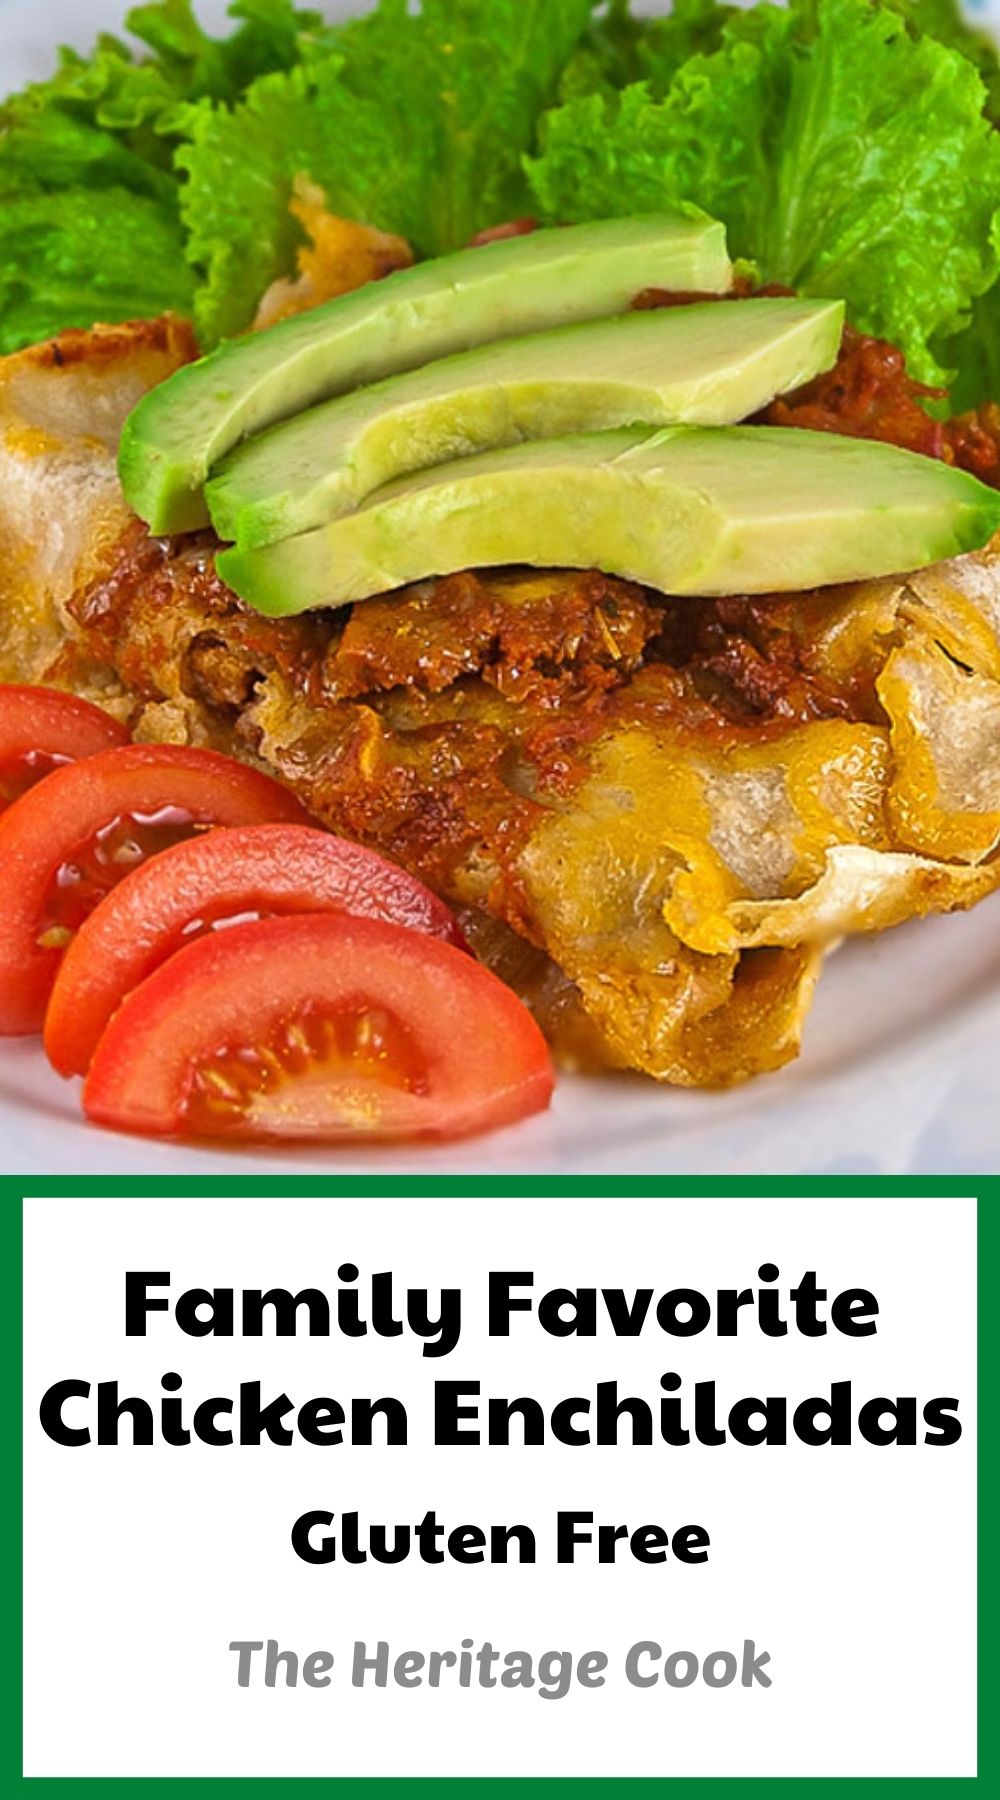 Family Favorite Chicken Enchiladas ©2020 Jane Bonacci, The Heritage Cook